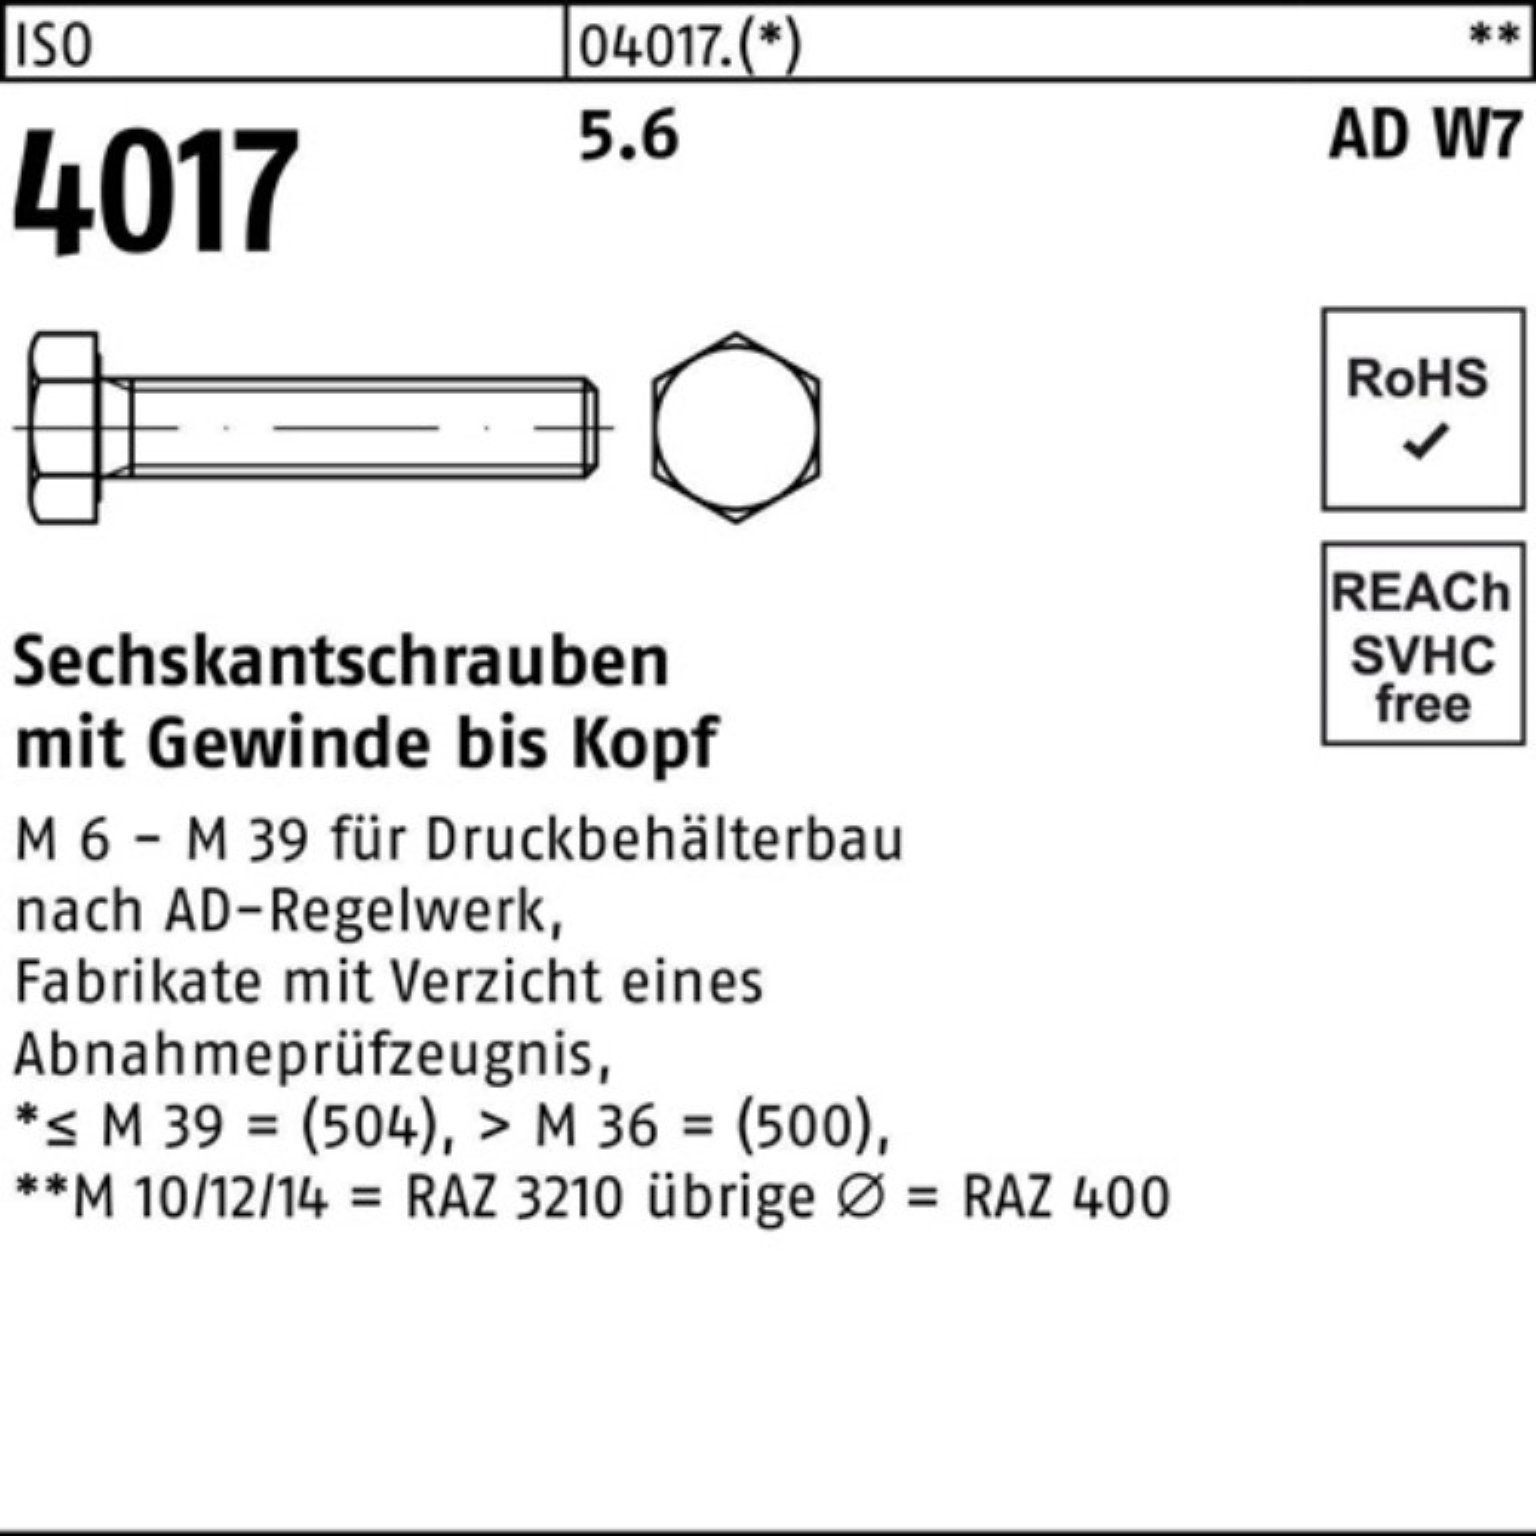 35 Pack ISO VG 5.6 I M16x 4017 100er Bufab AD W7 50 Sechskantschraube Stück Sechskantschraube